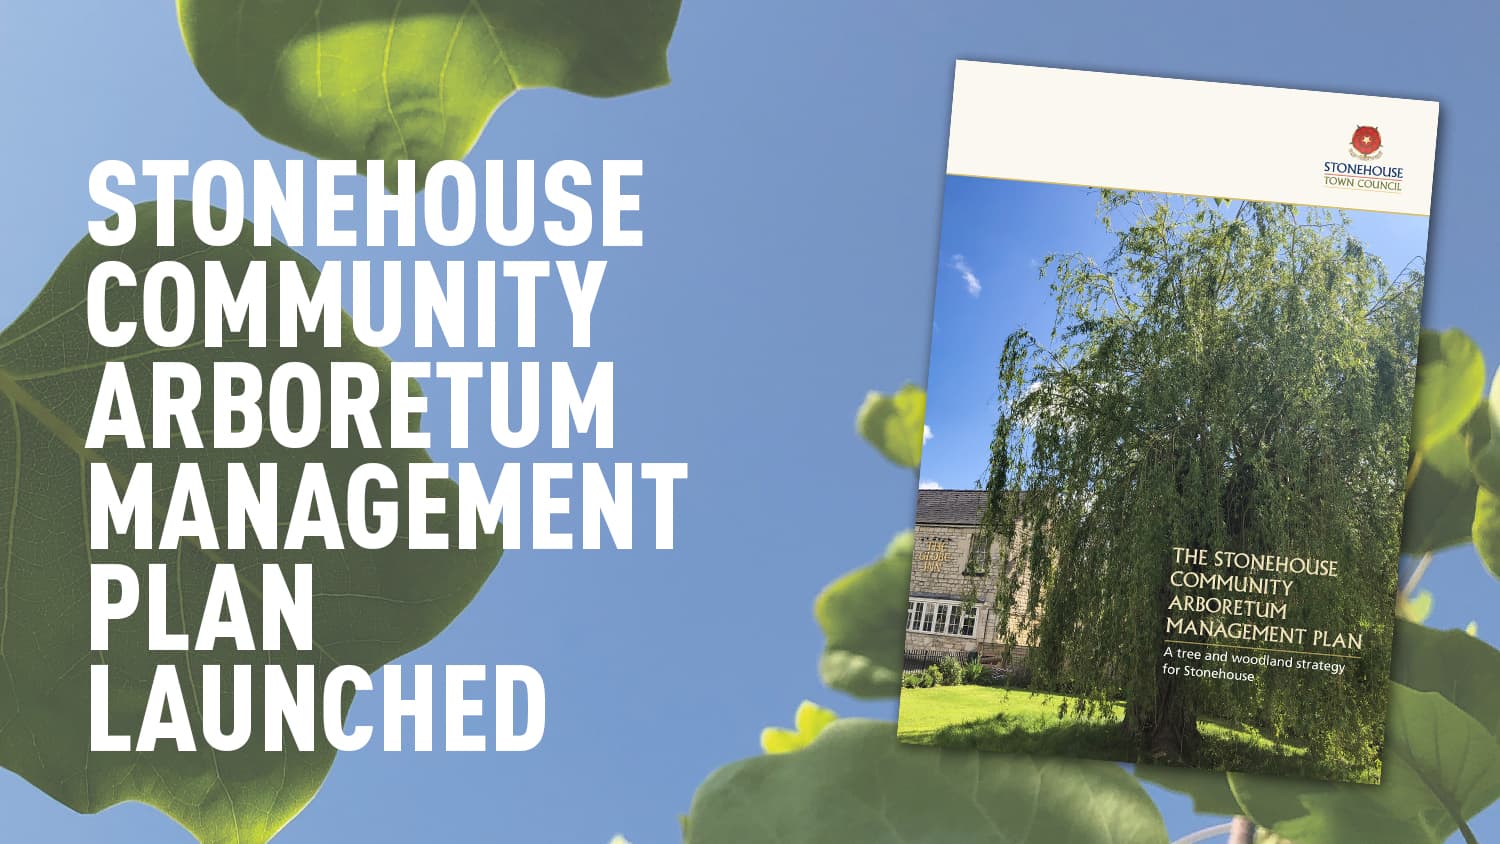 The Stonehouse Community Arboretum Management Plan